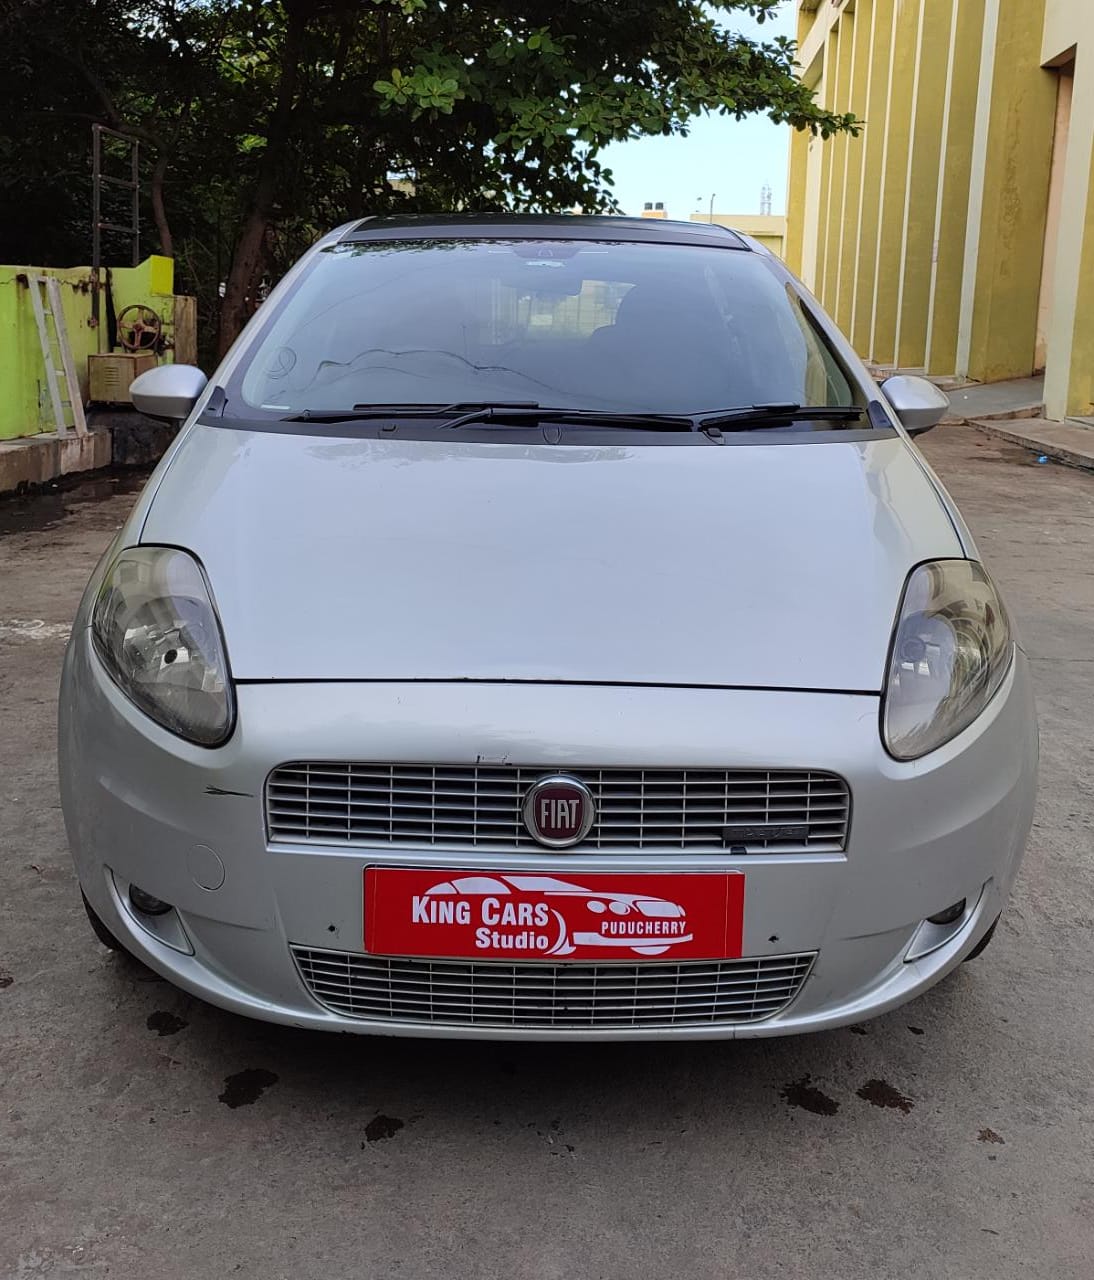 5216-for-sale-Fiat-Grande-Punto-Diesel-Third-Owner-2014-PY-registered-rs-209999